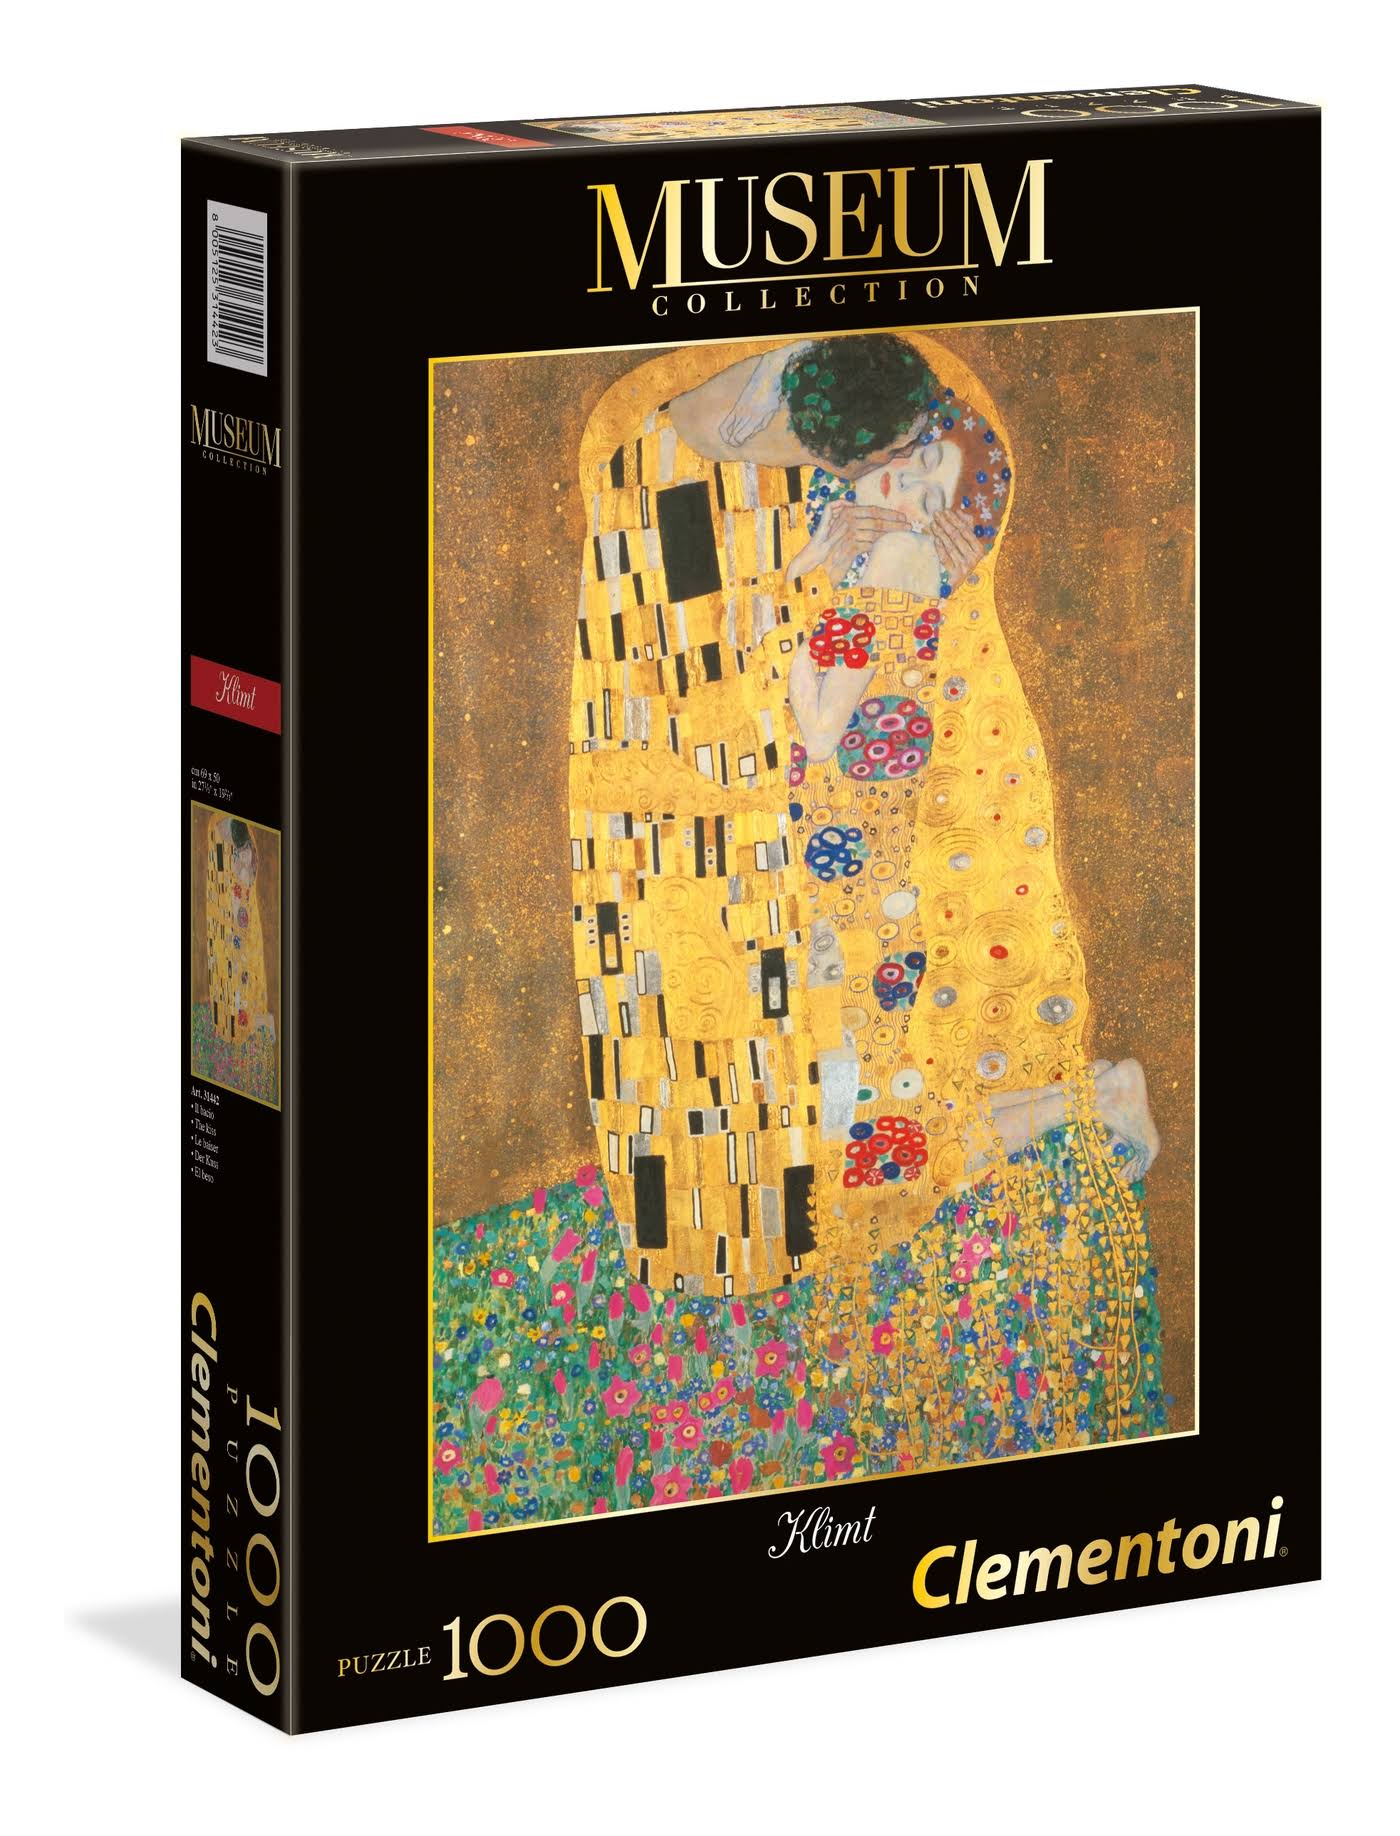 Clementoni Museum Collection - 1000 Pieces